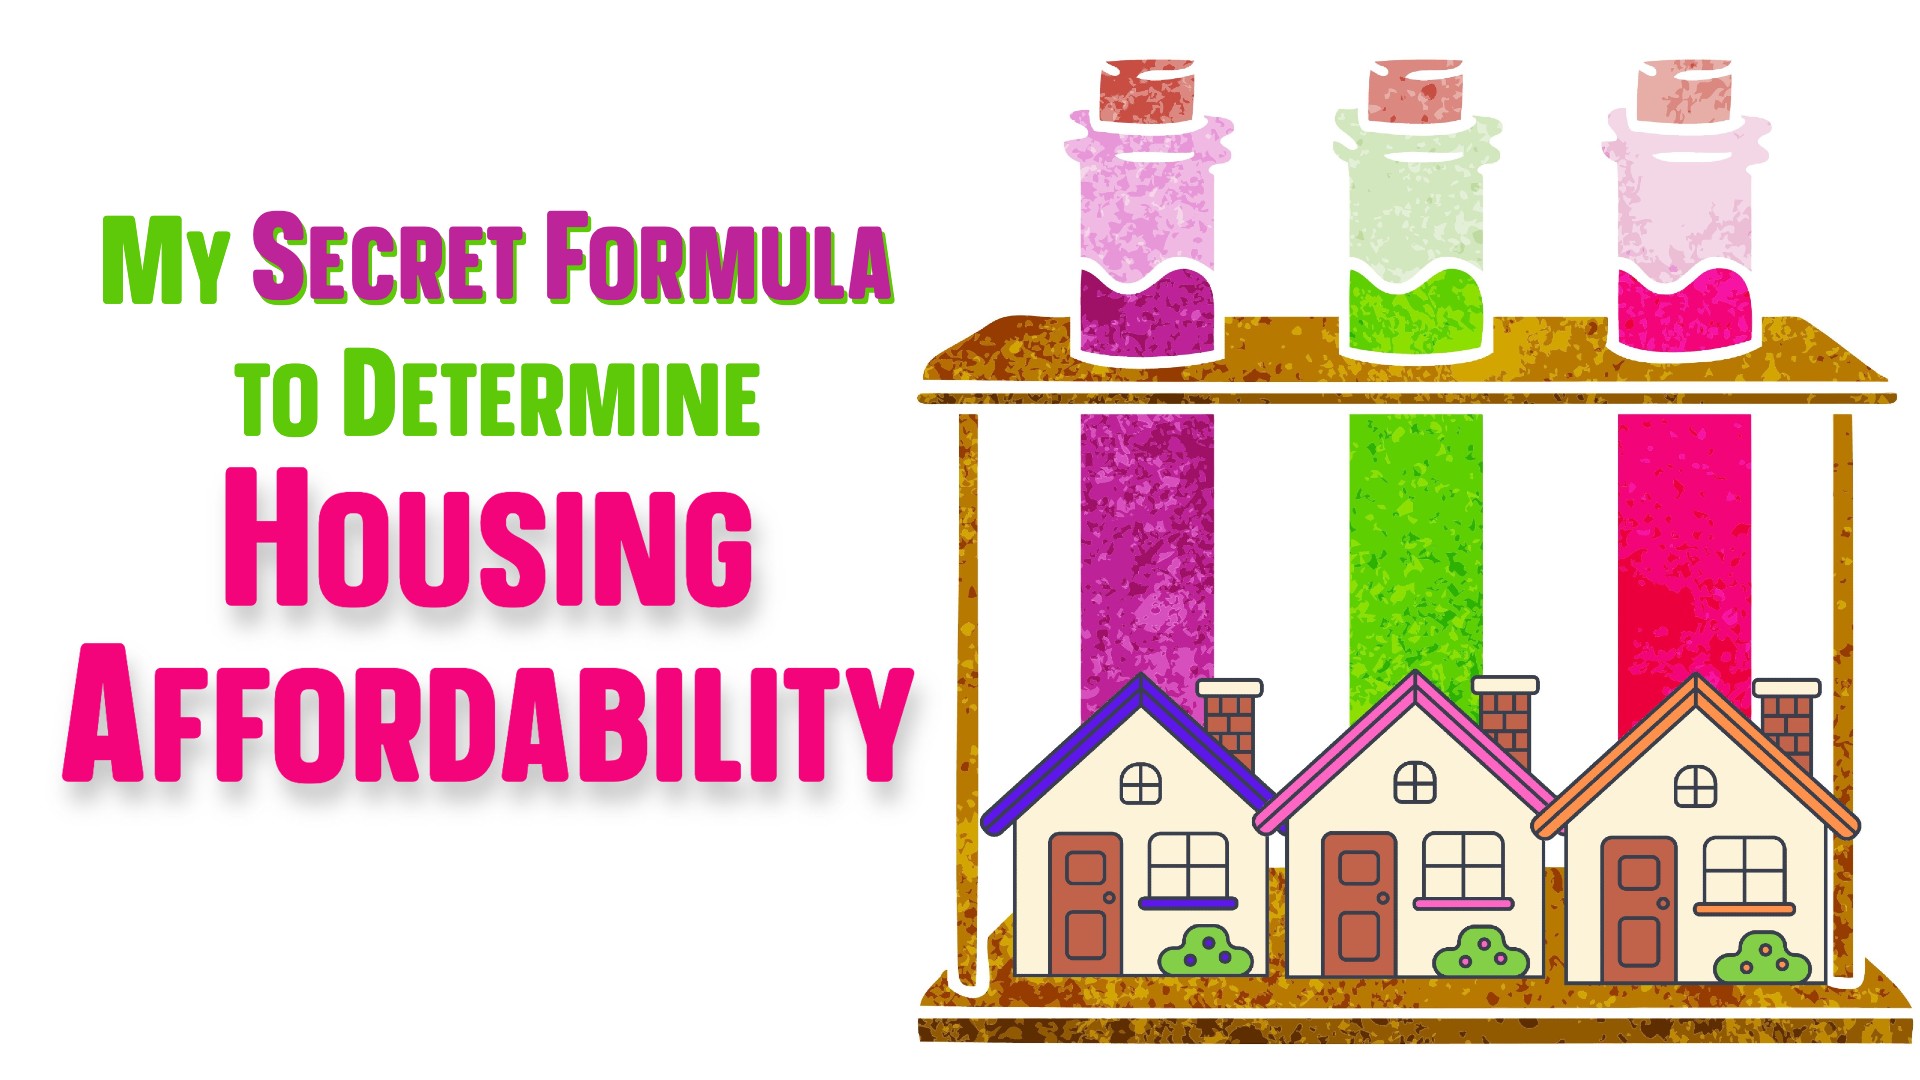 My Secret Formula to Determine Housing Affordability